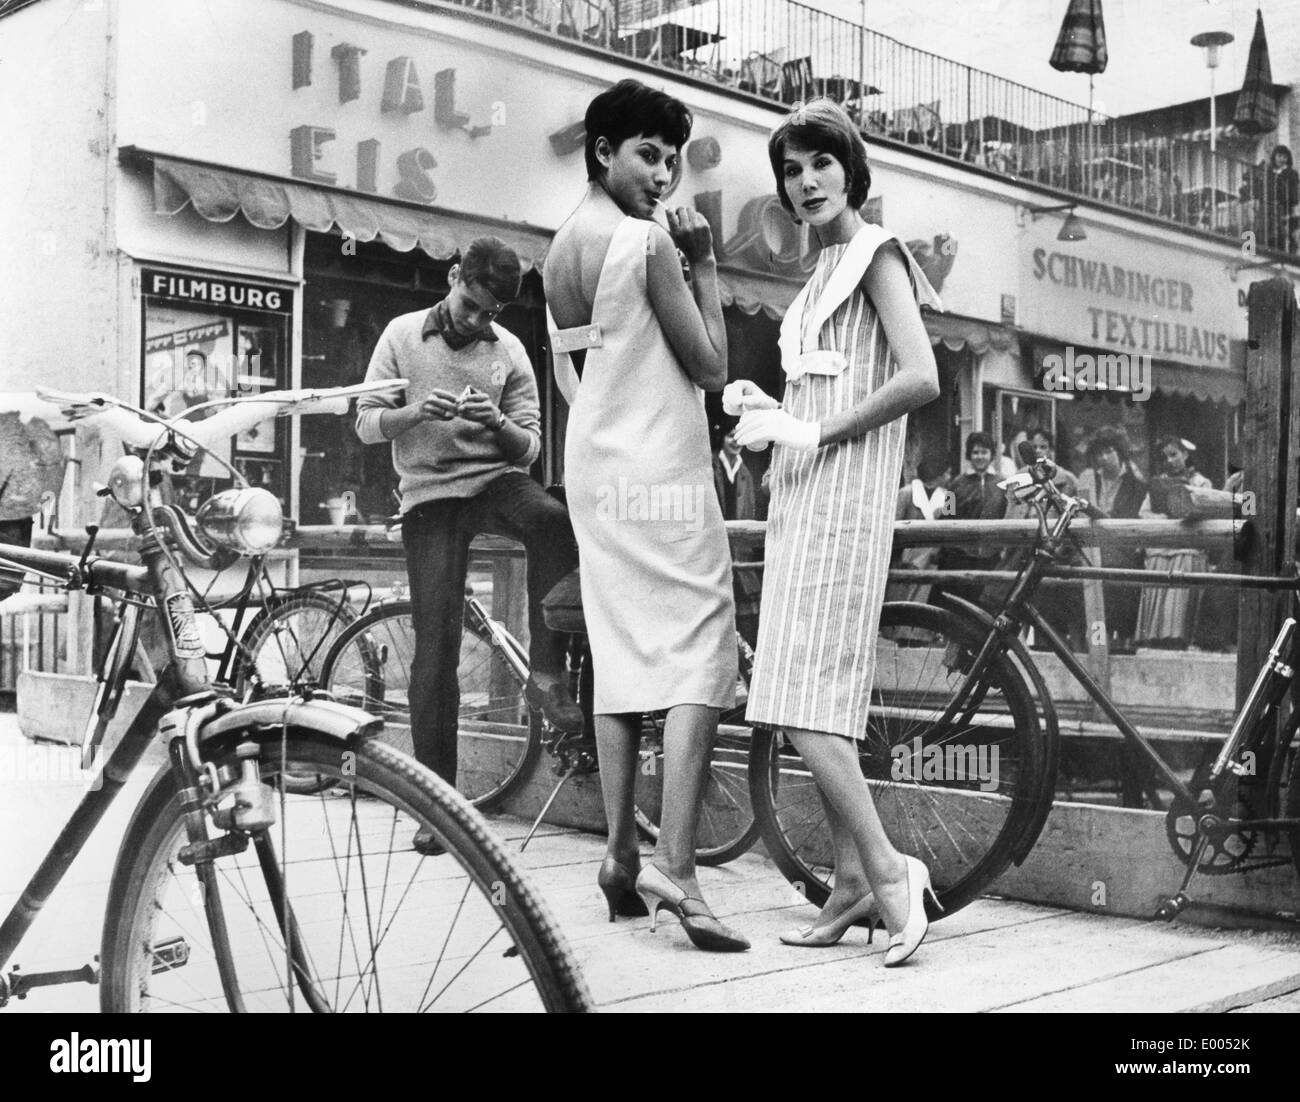 Women's fashion, 1958 Stock Photo - Alamy